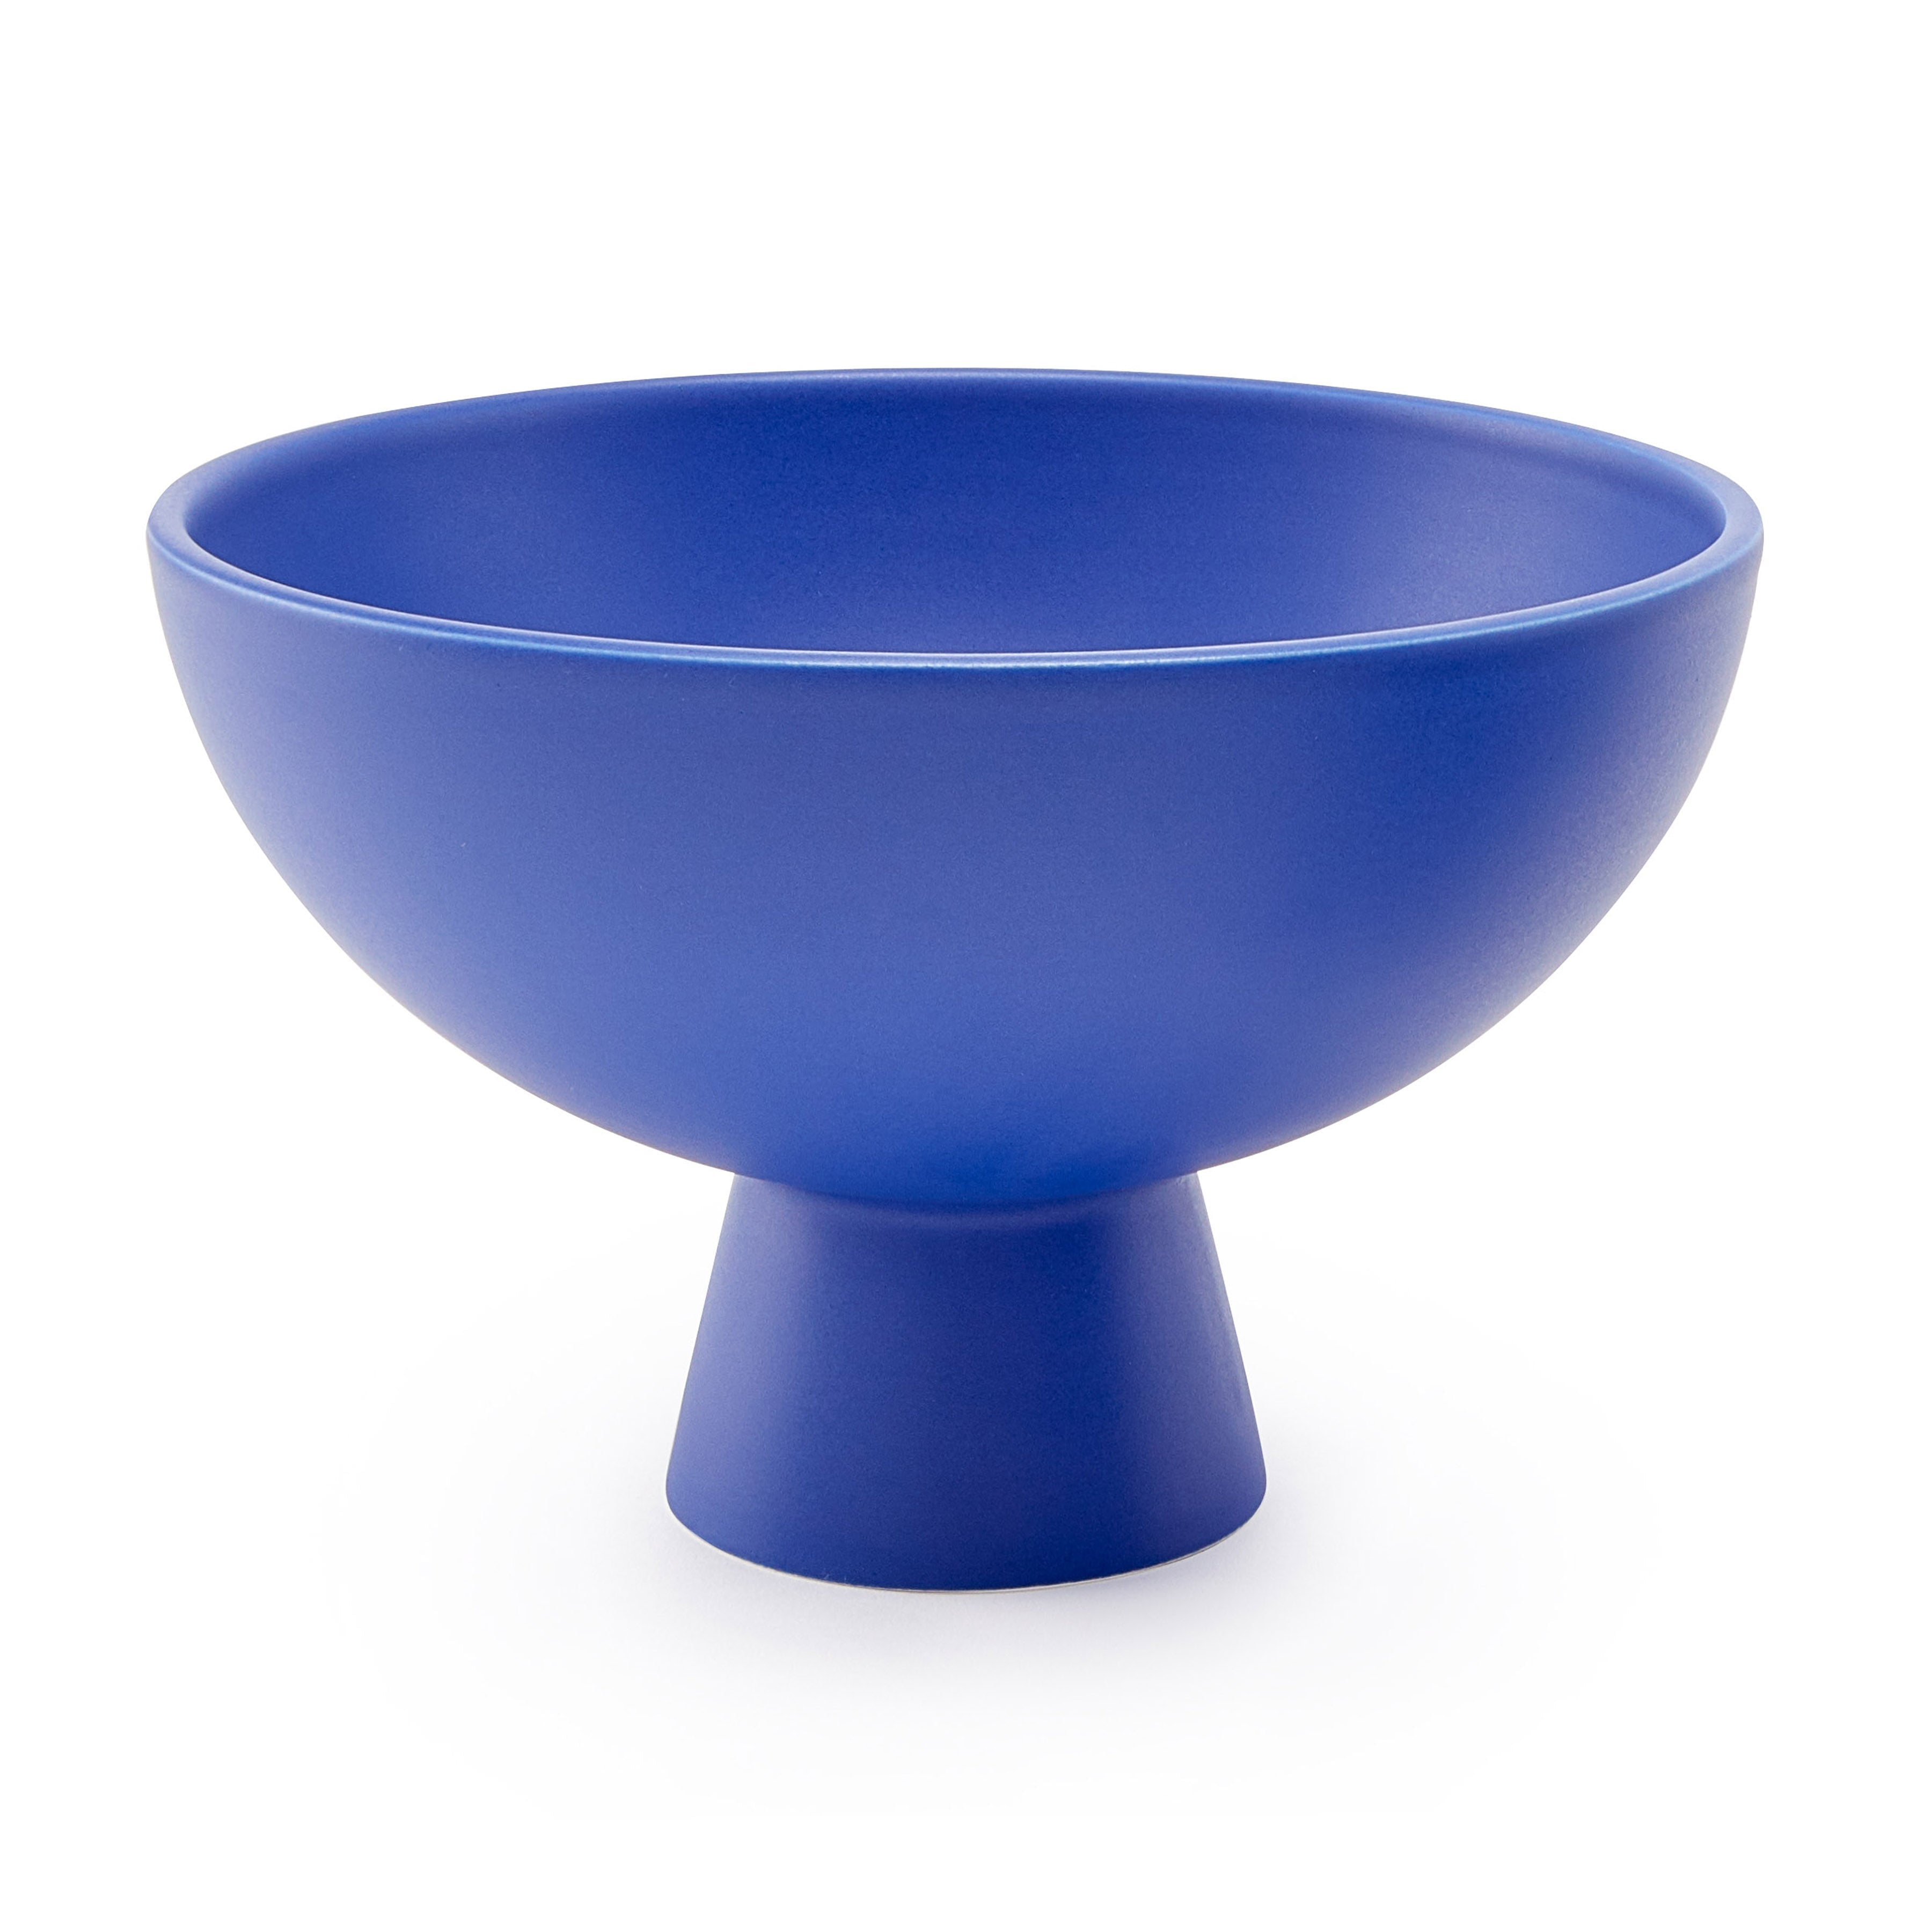 Raawii Strøm Bowl Serving Bowls MoMA Horizon Blue Large 